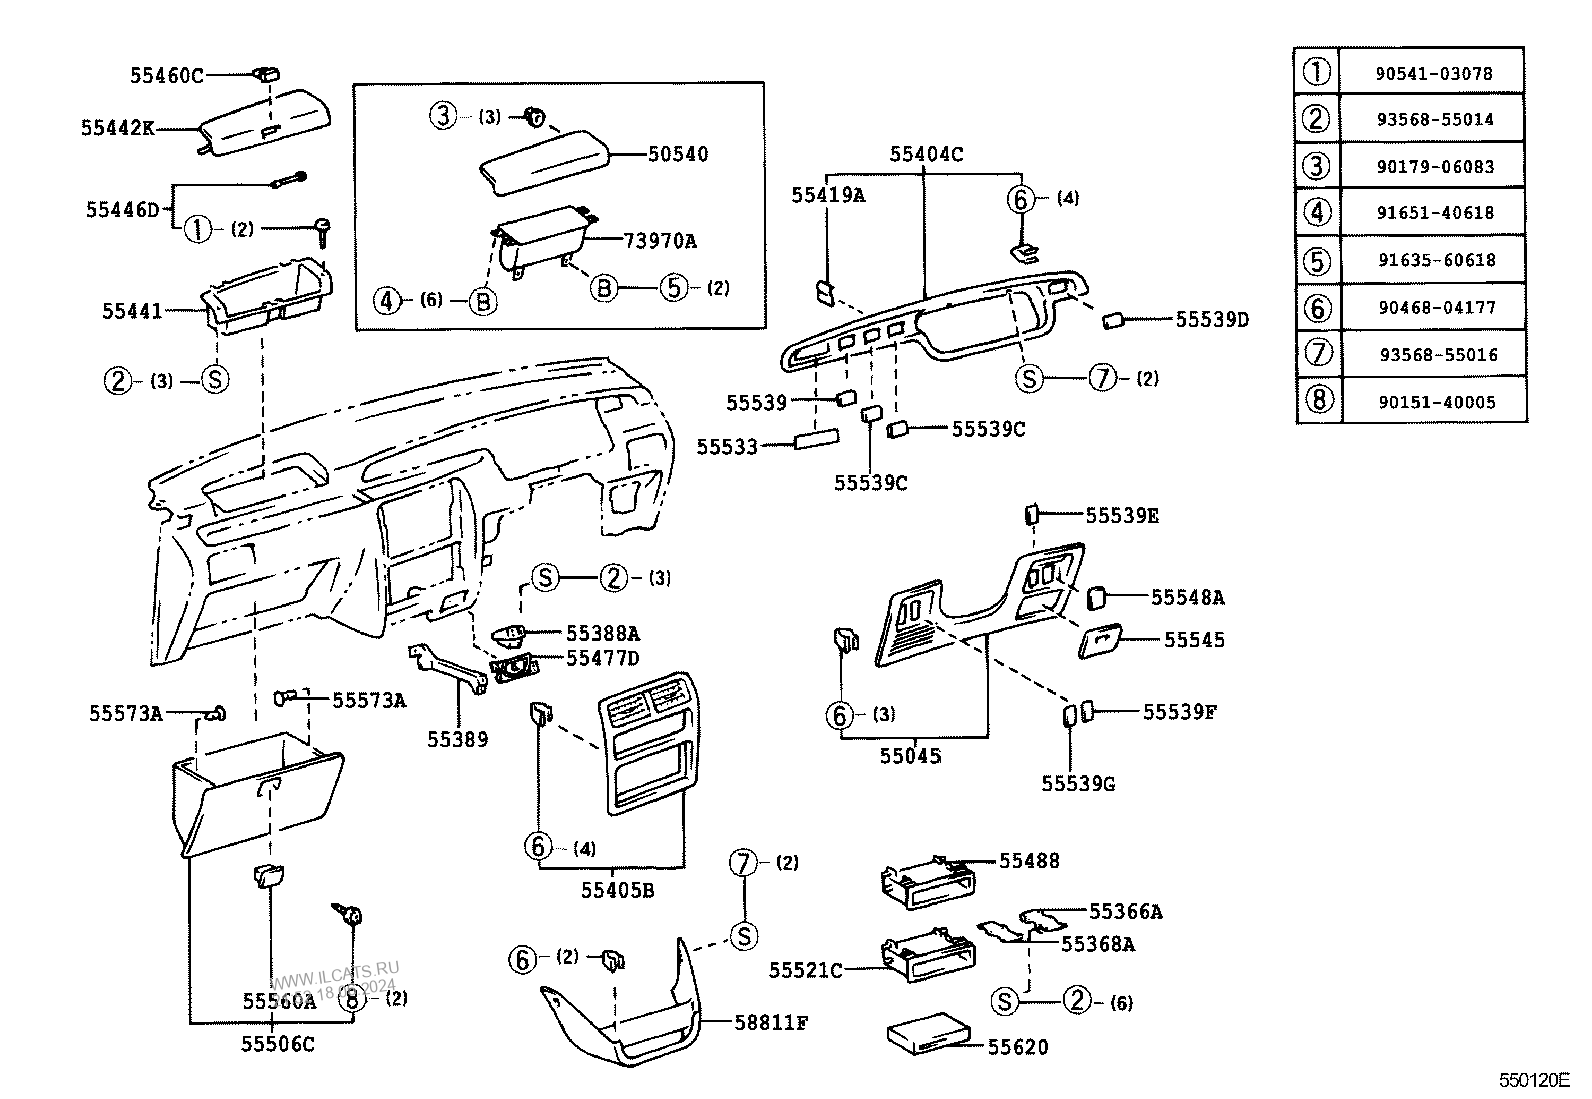 Toyotum Noah Fuse Box Manual - Complete Wiring Schemas